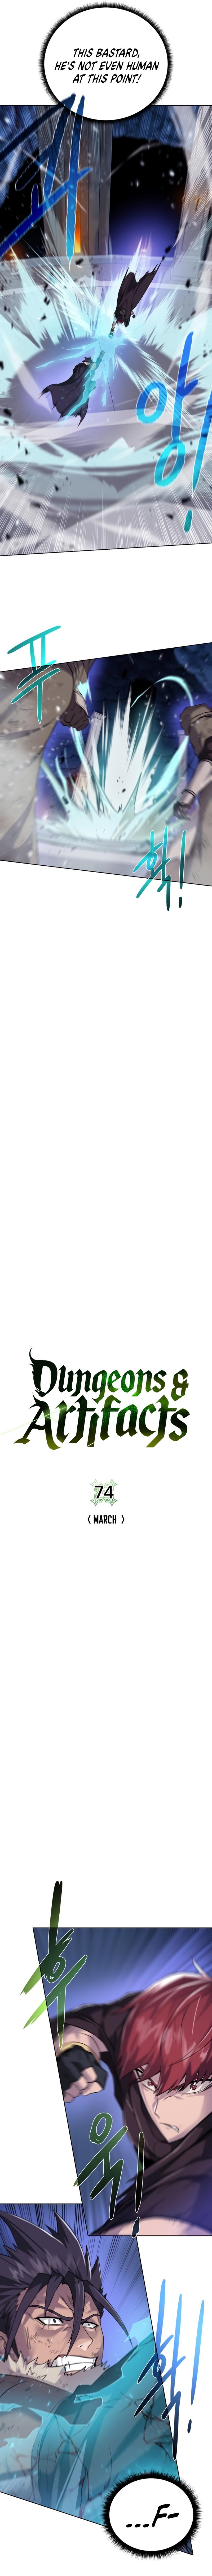 dungeons-artifacts-chap-74-3